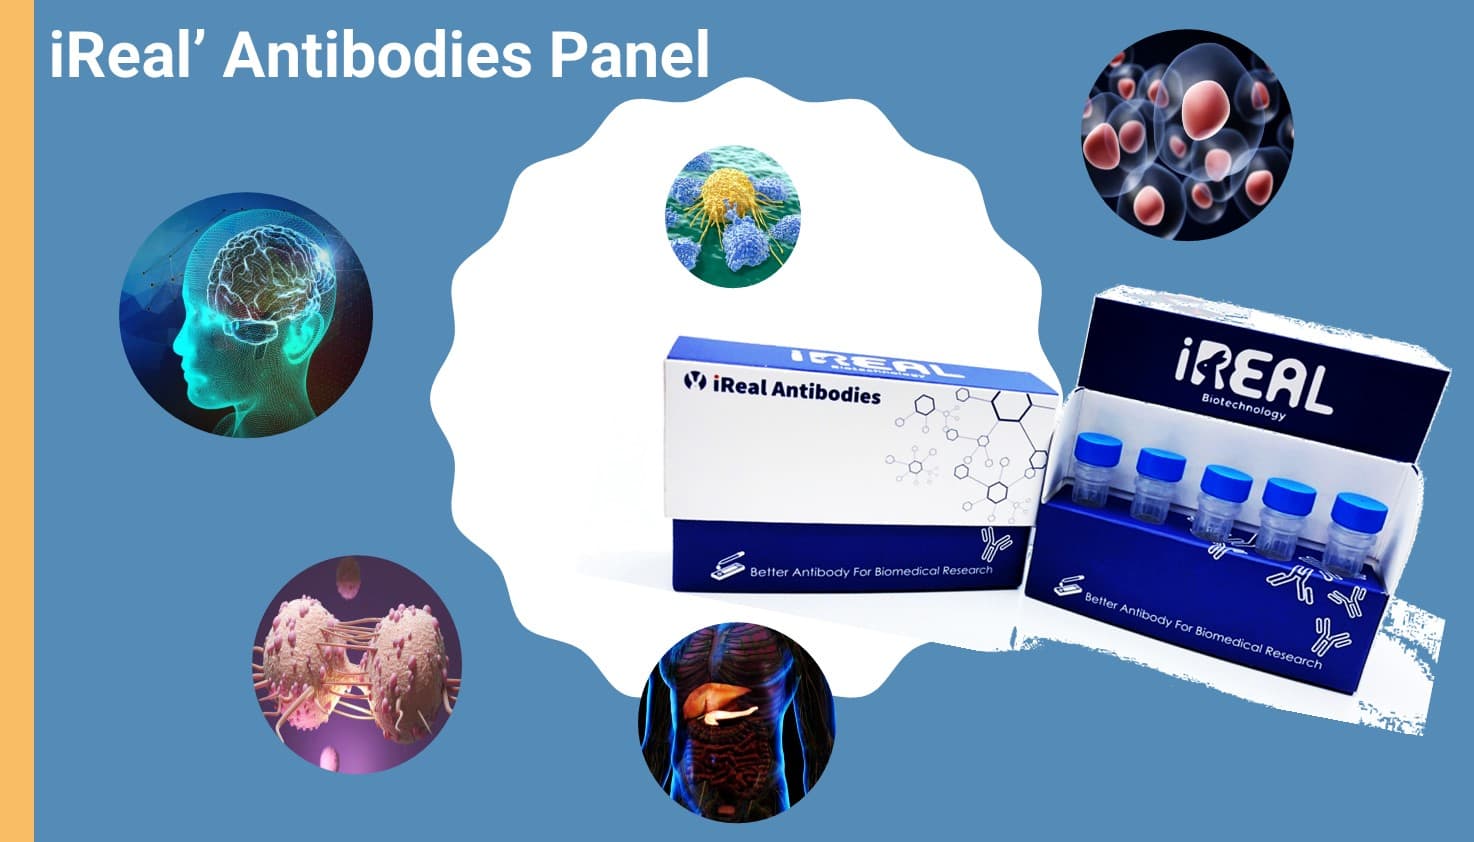 iReal’Antibodies Panel Kits